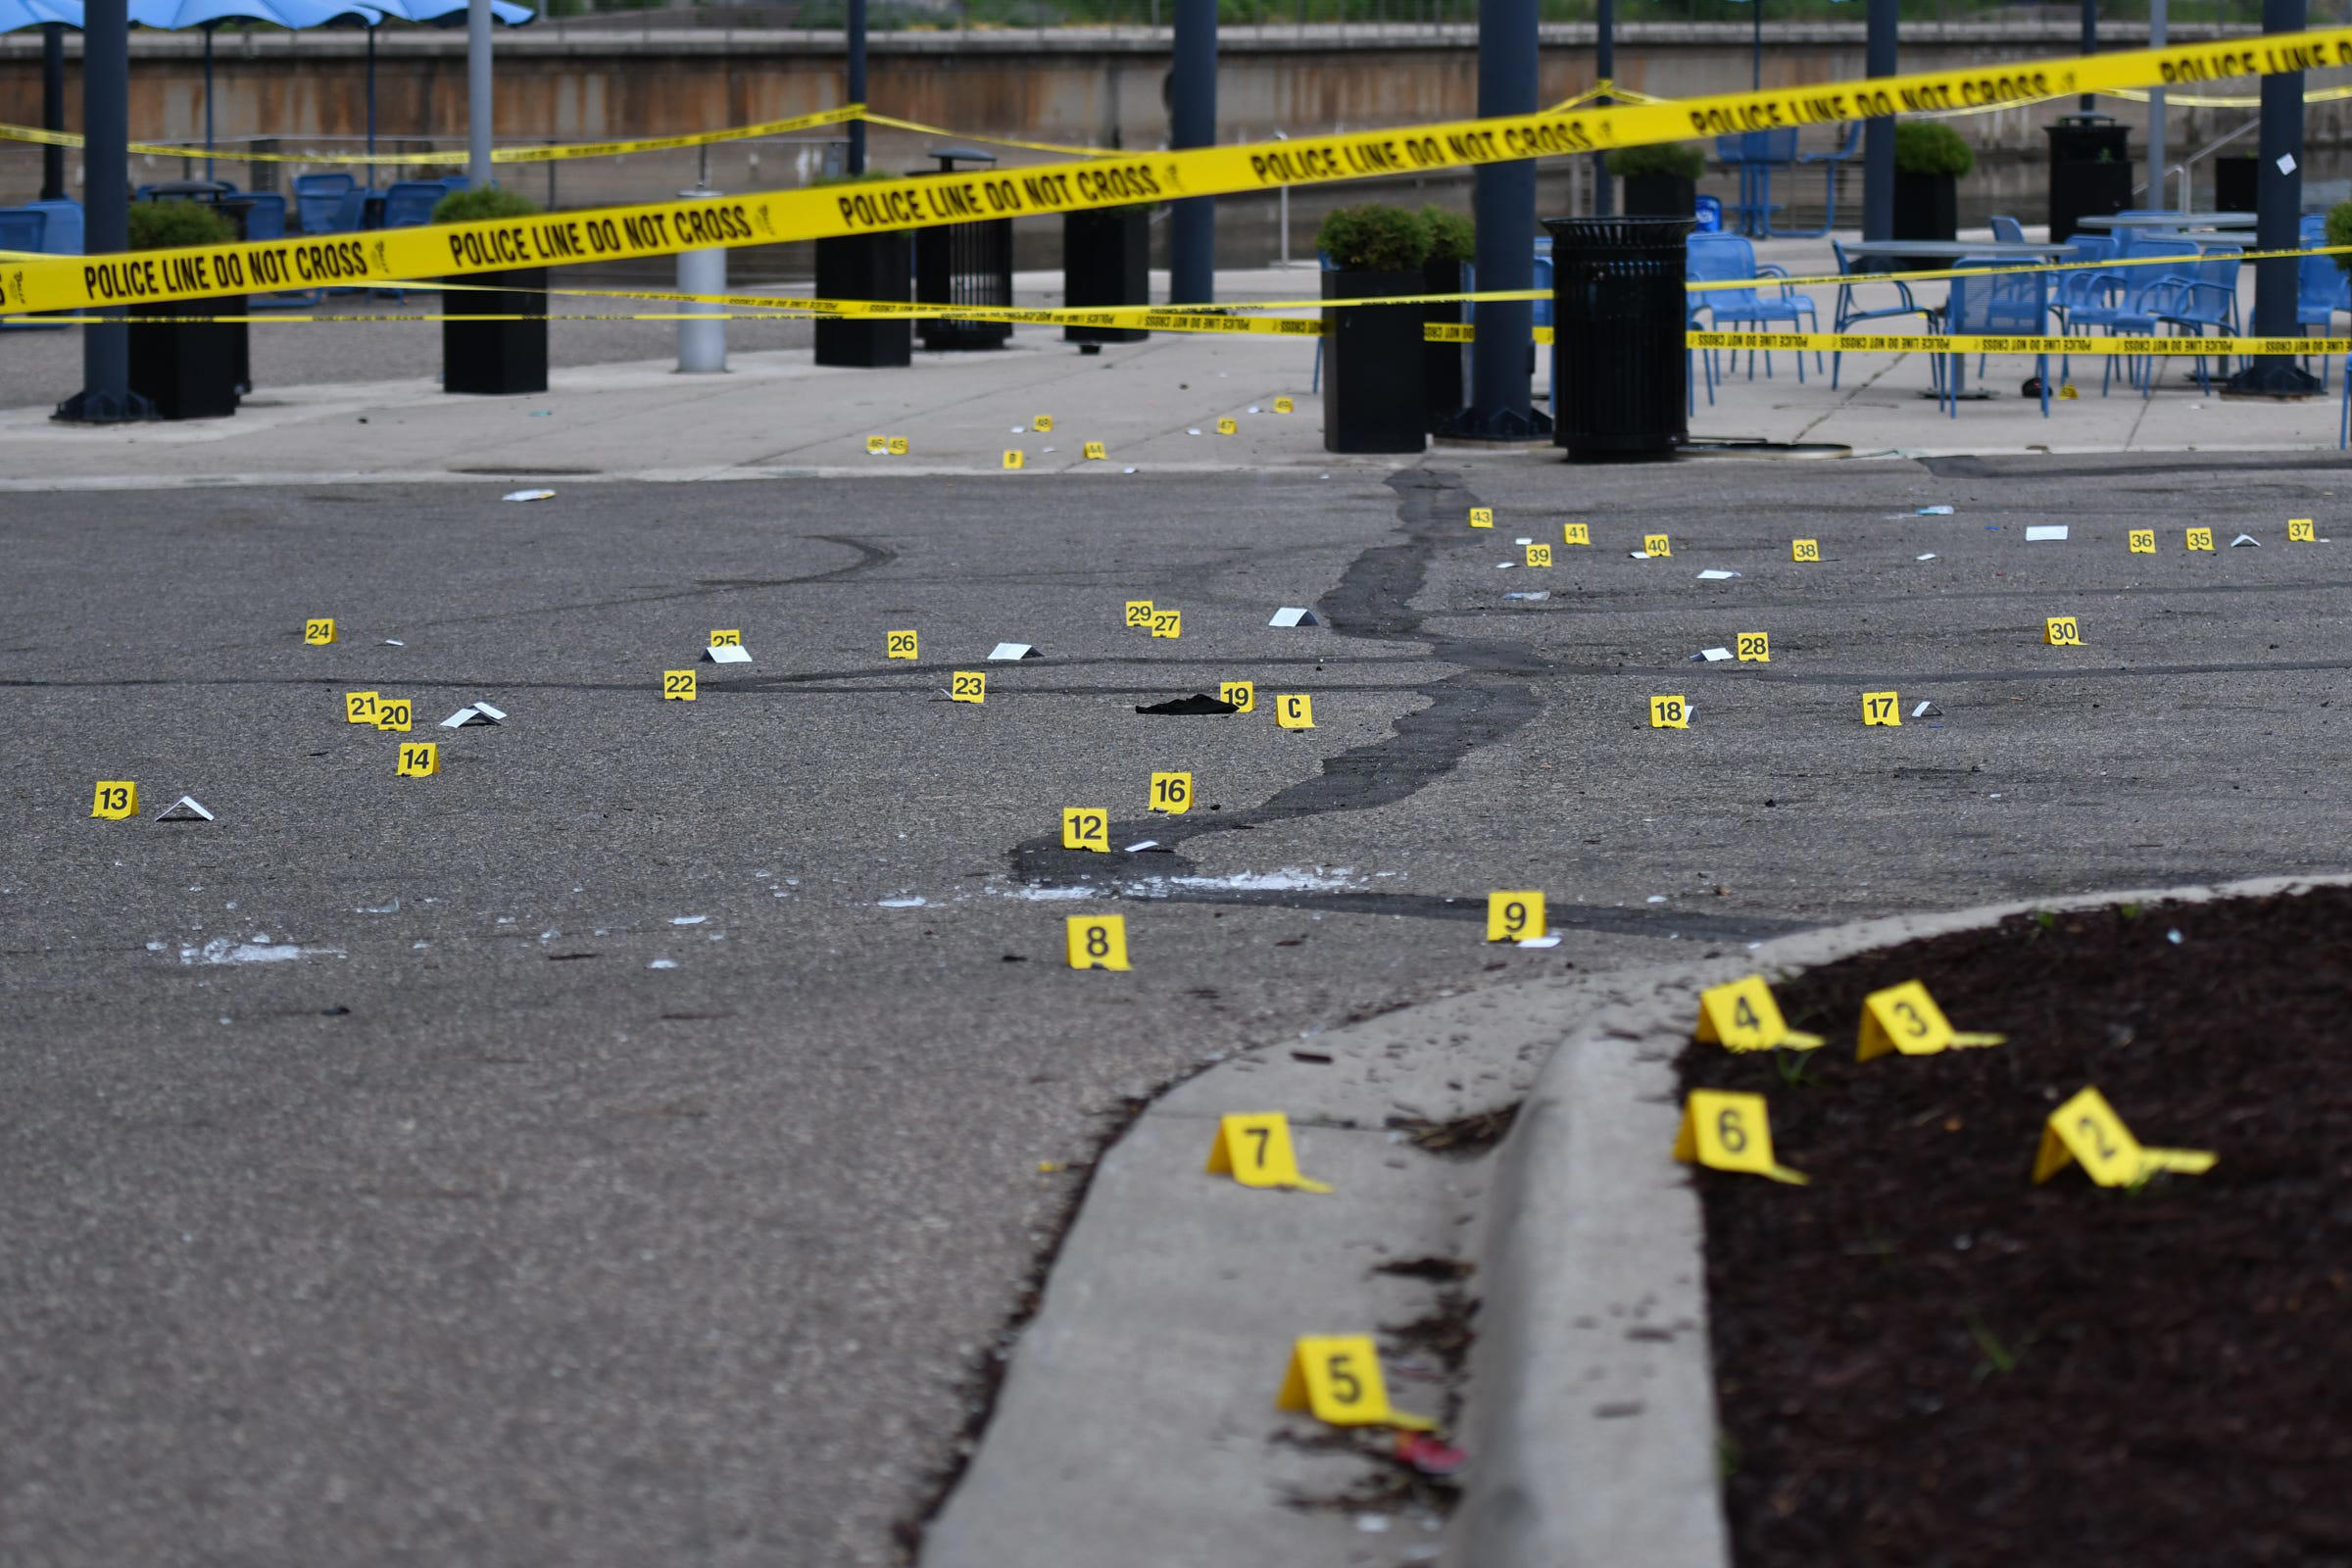 Teen Dies, Several Injured in Early Morning Shooting in Michigan